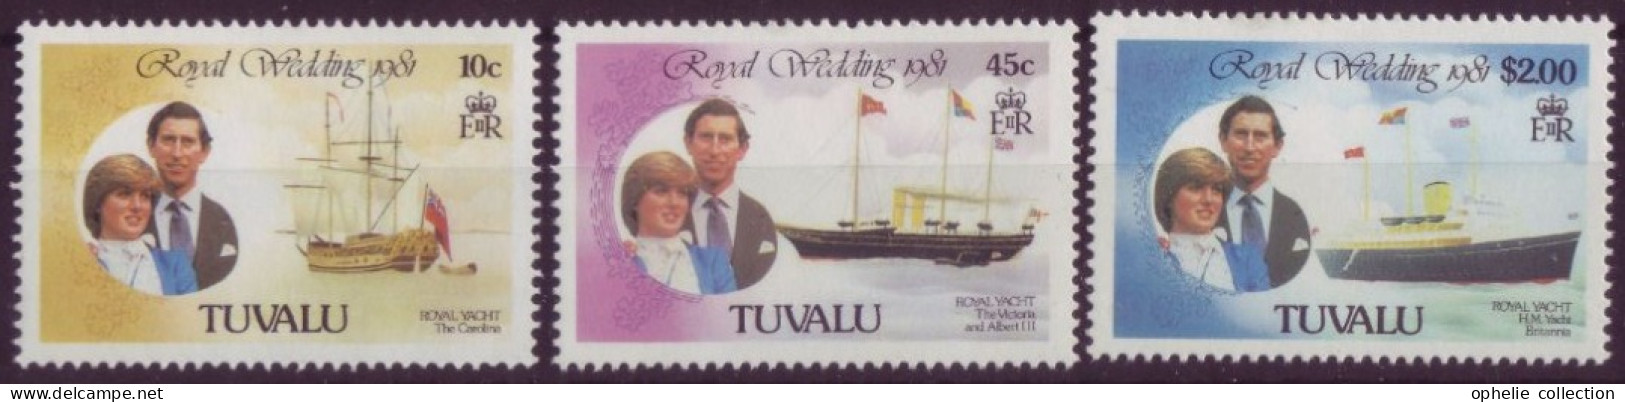 Océanie - Tuvalu - 1981 - Royal Wedding - 3 Timbres Différents - 7338 - Tuvalu